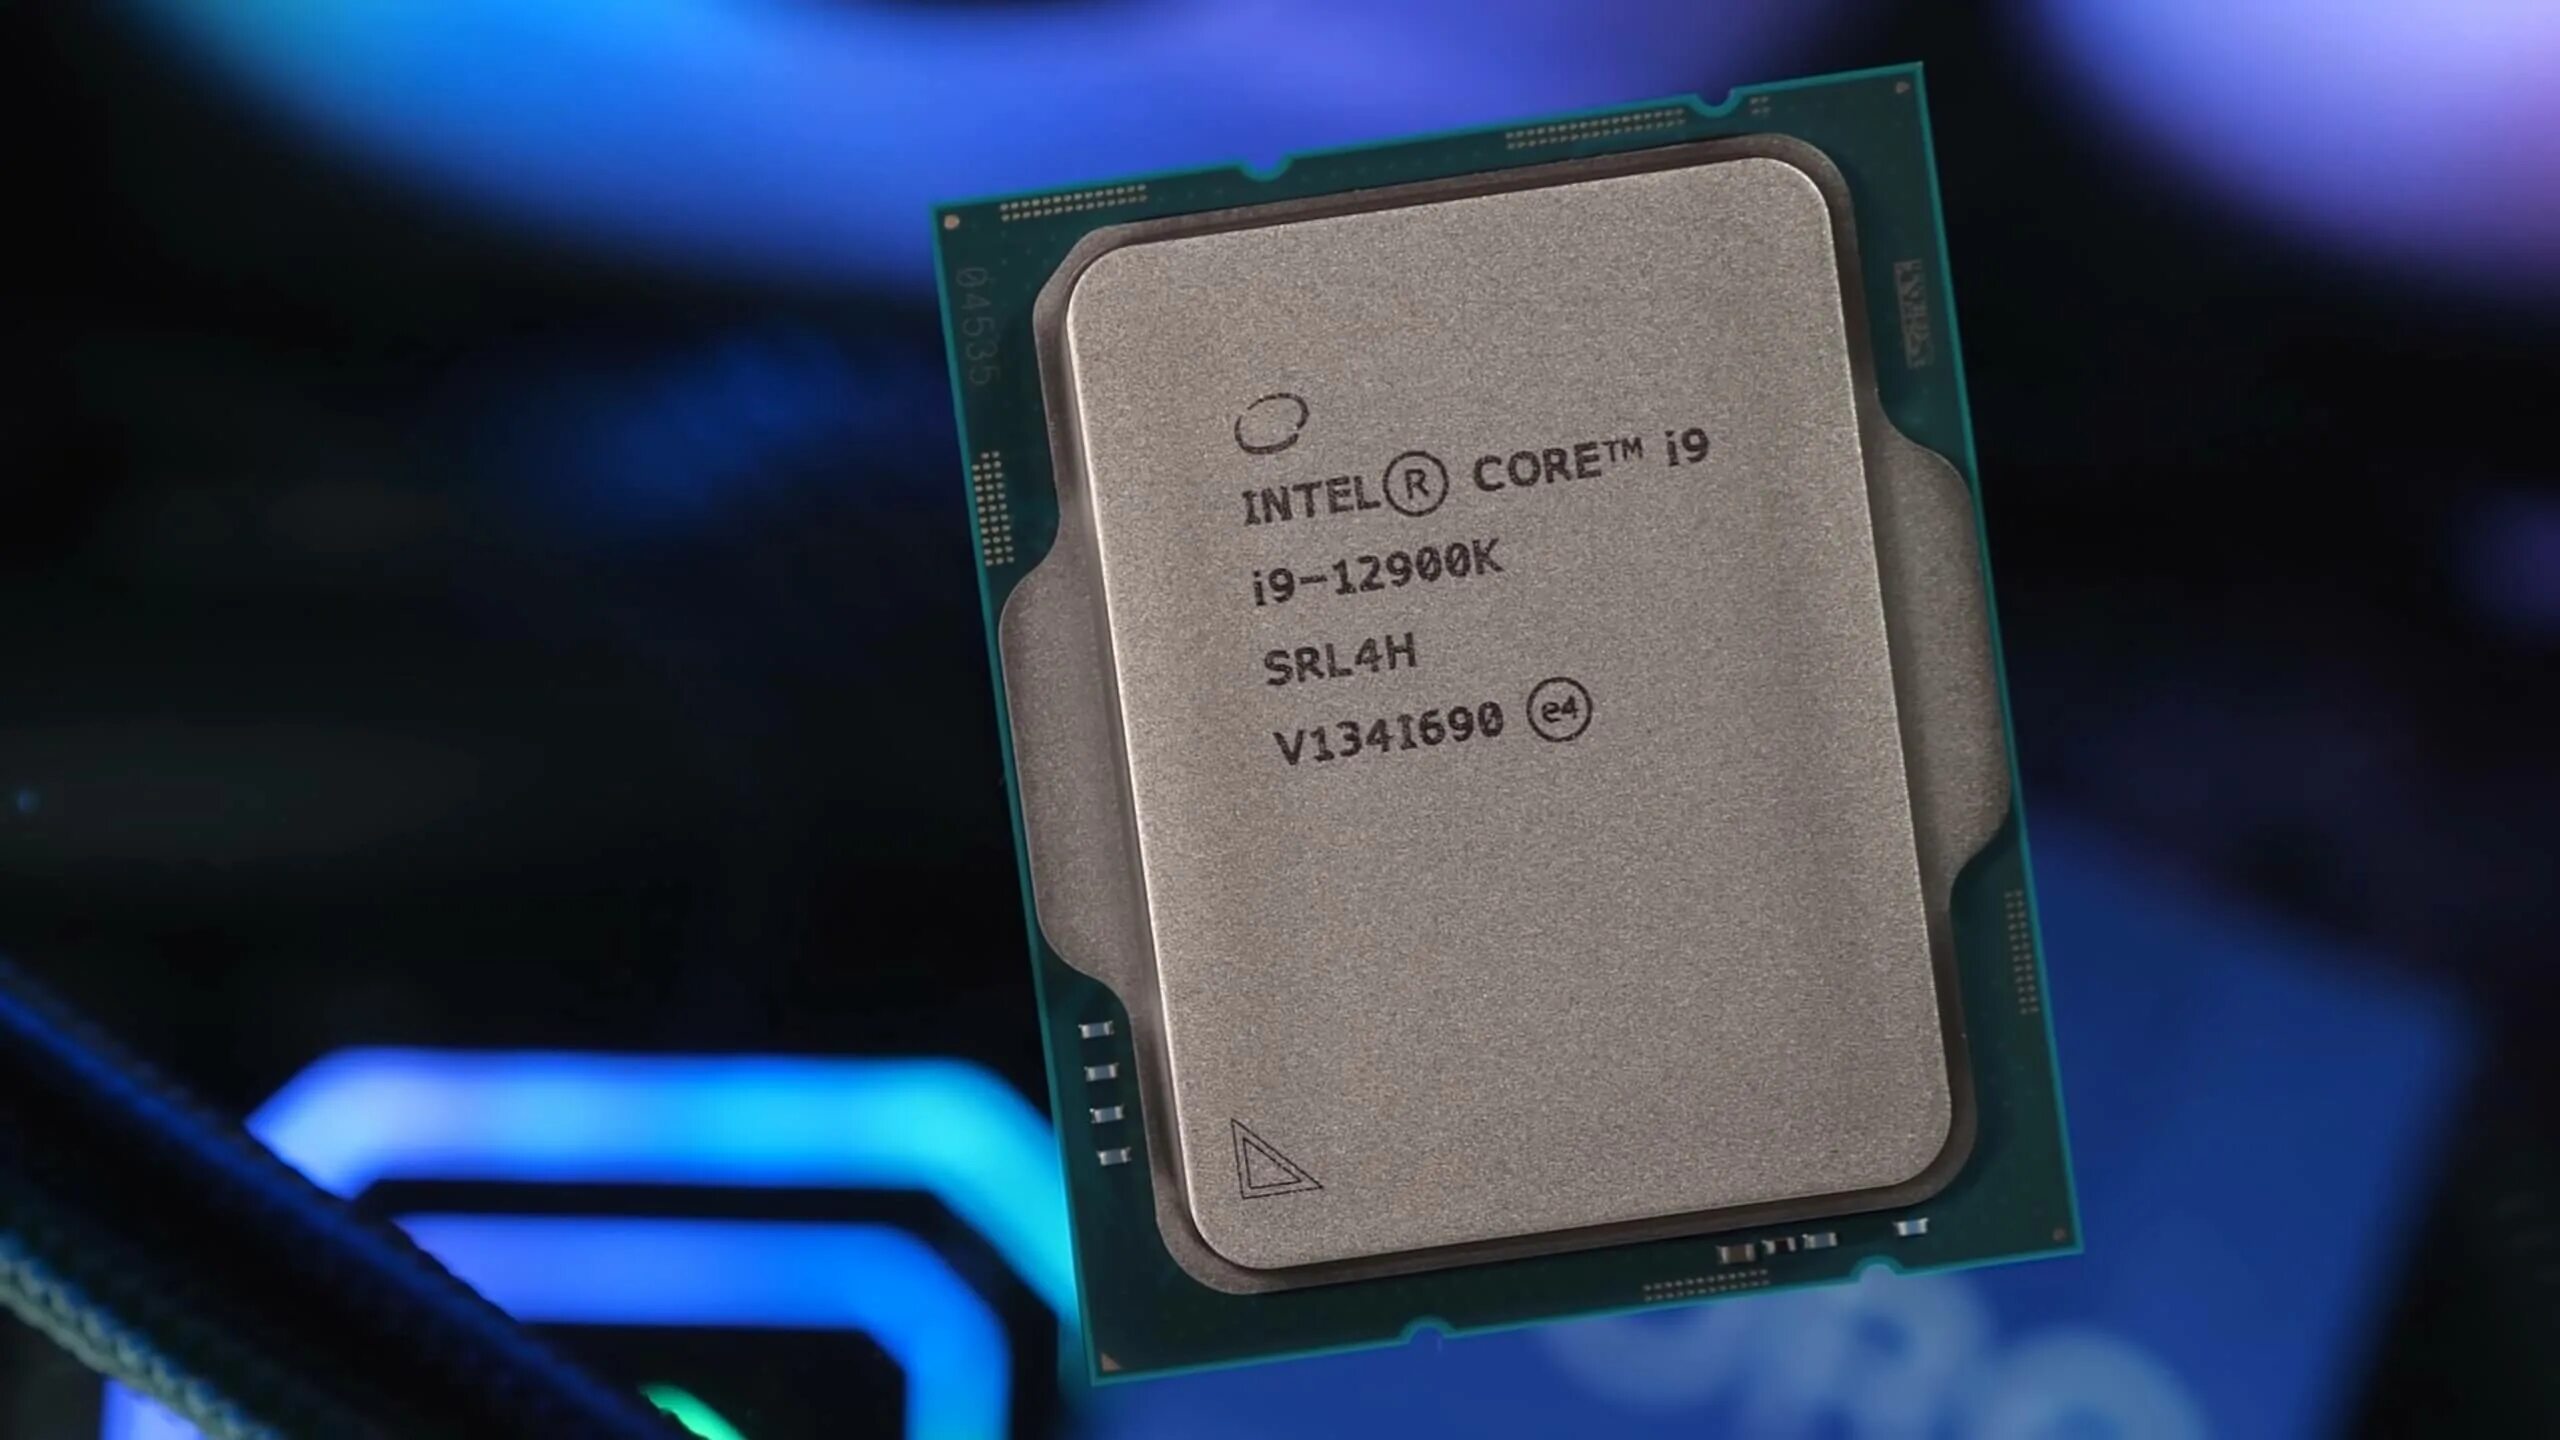 Процессор i9 12900k. Intel Core i9 12900k. Intel Core i9-12900ks. Процессор Intel Core i9 12900k, LGA 1700, OEM. Процессор интел 9